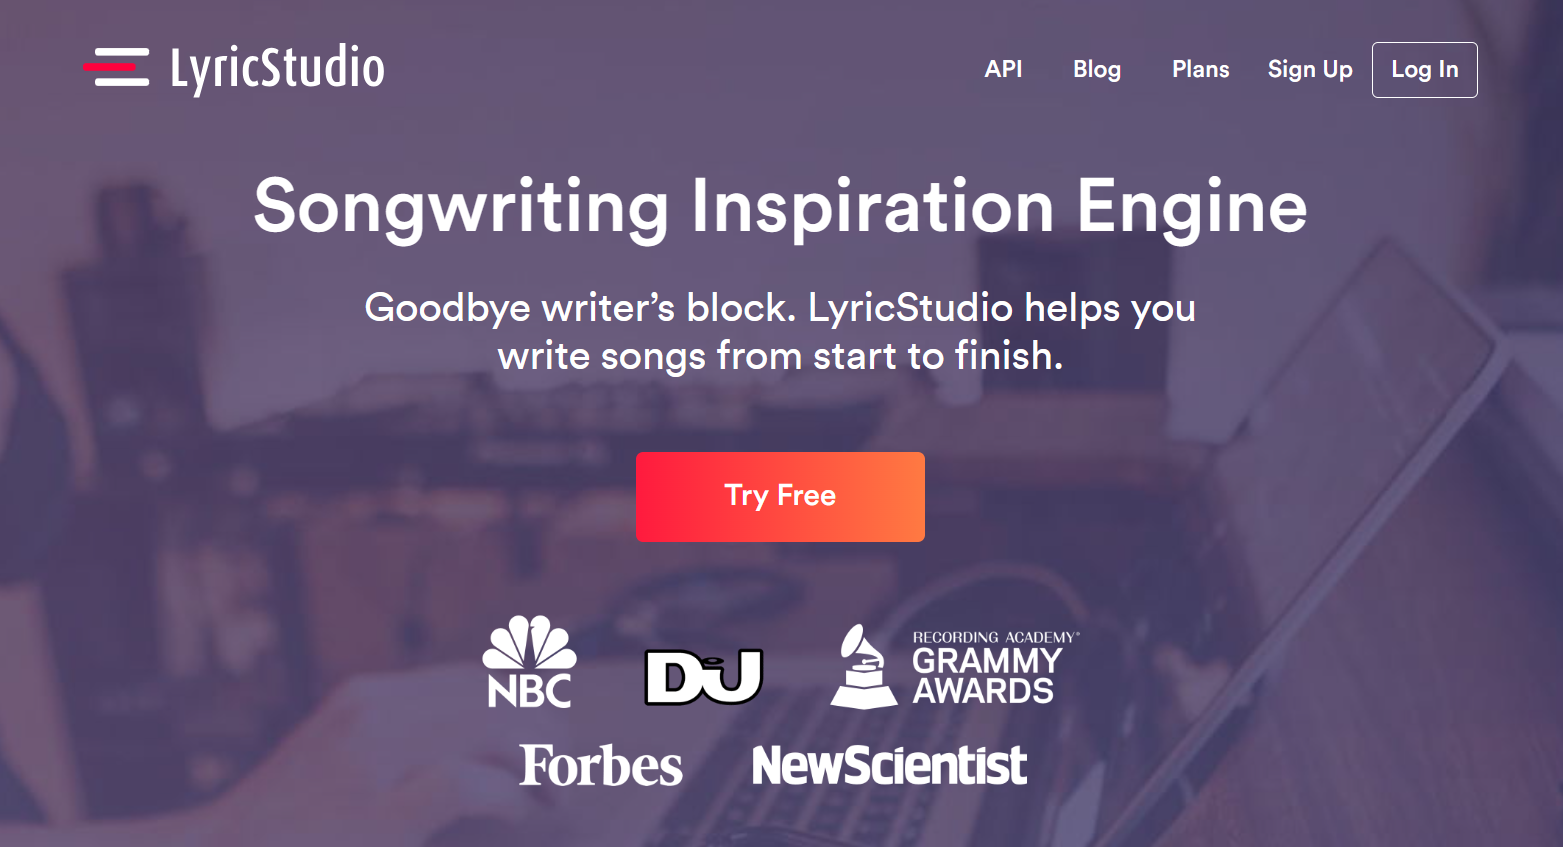 lyricstudio.net – Songwriting Inspiration Engine